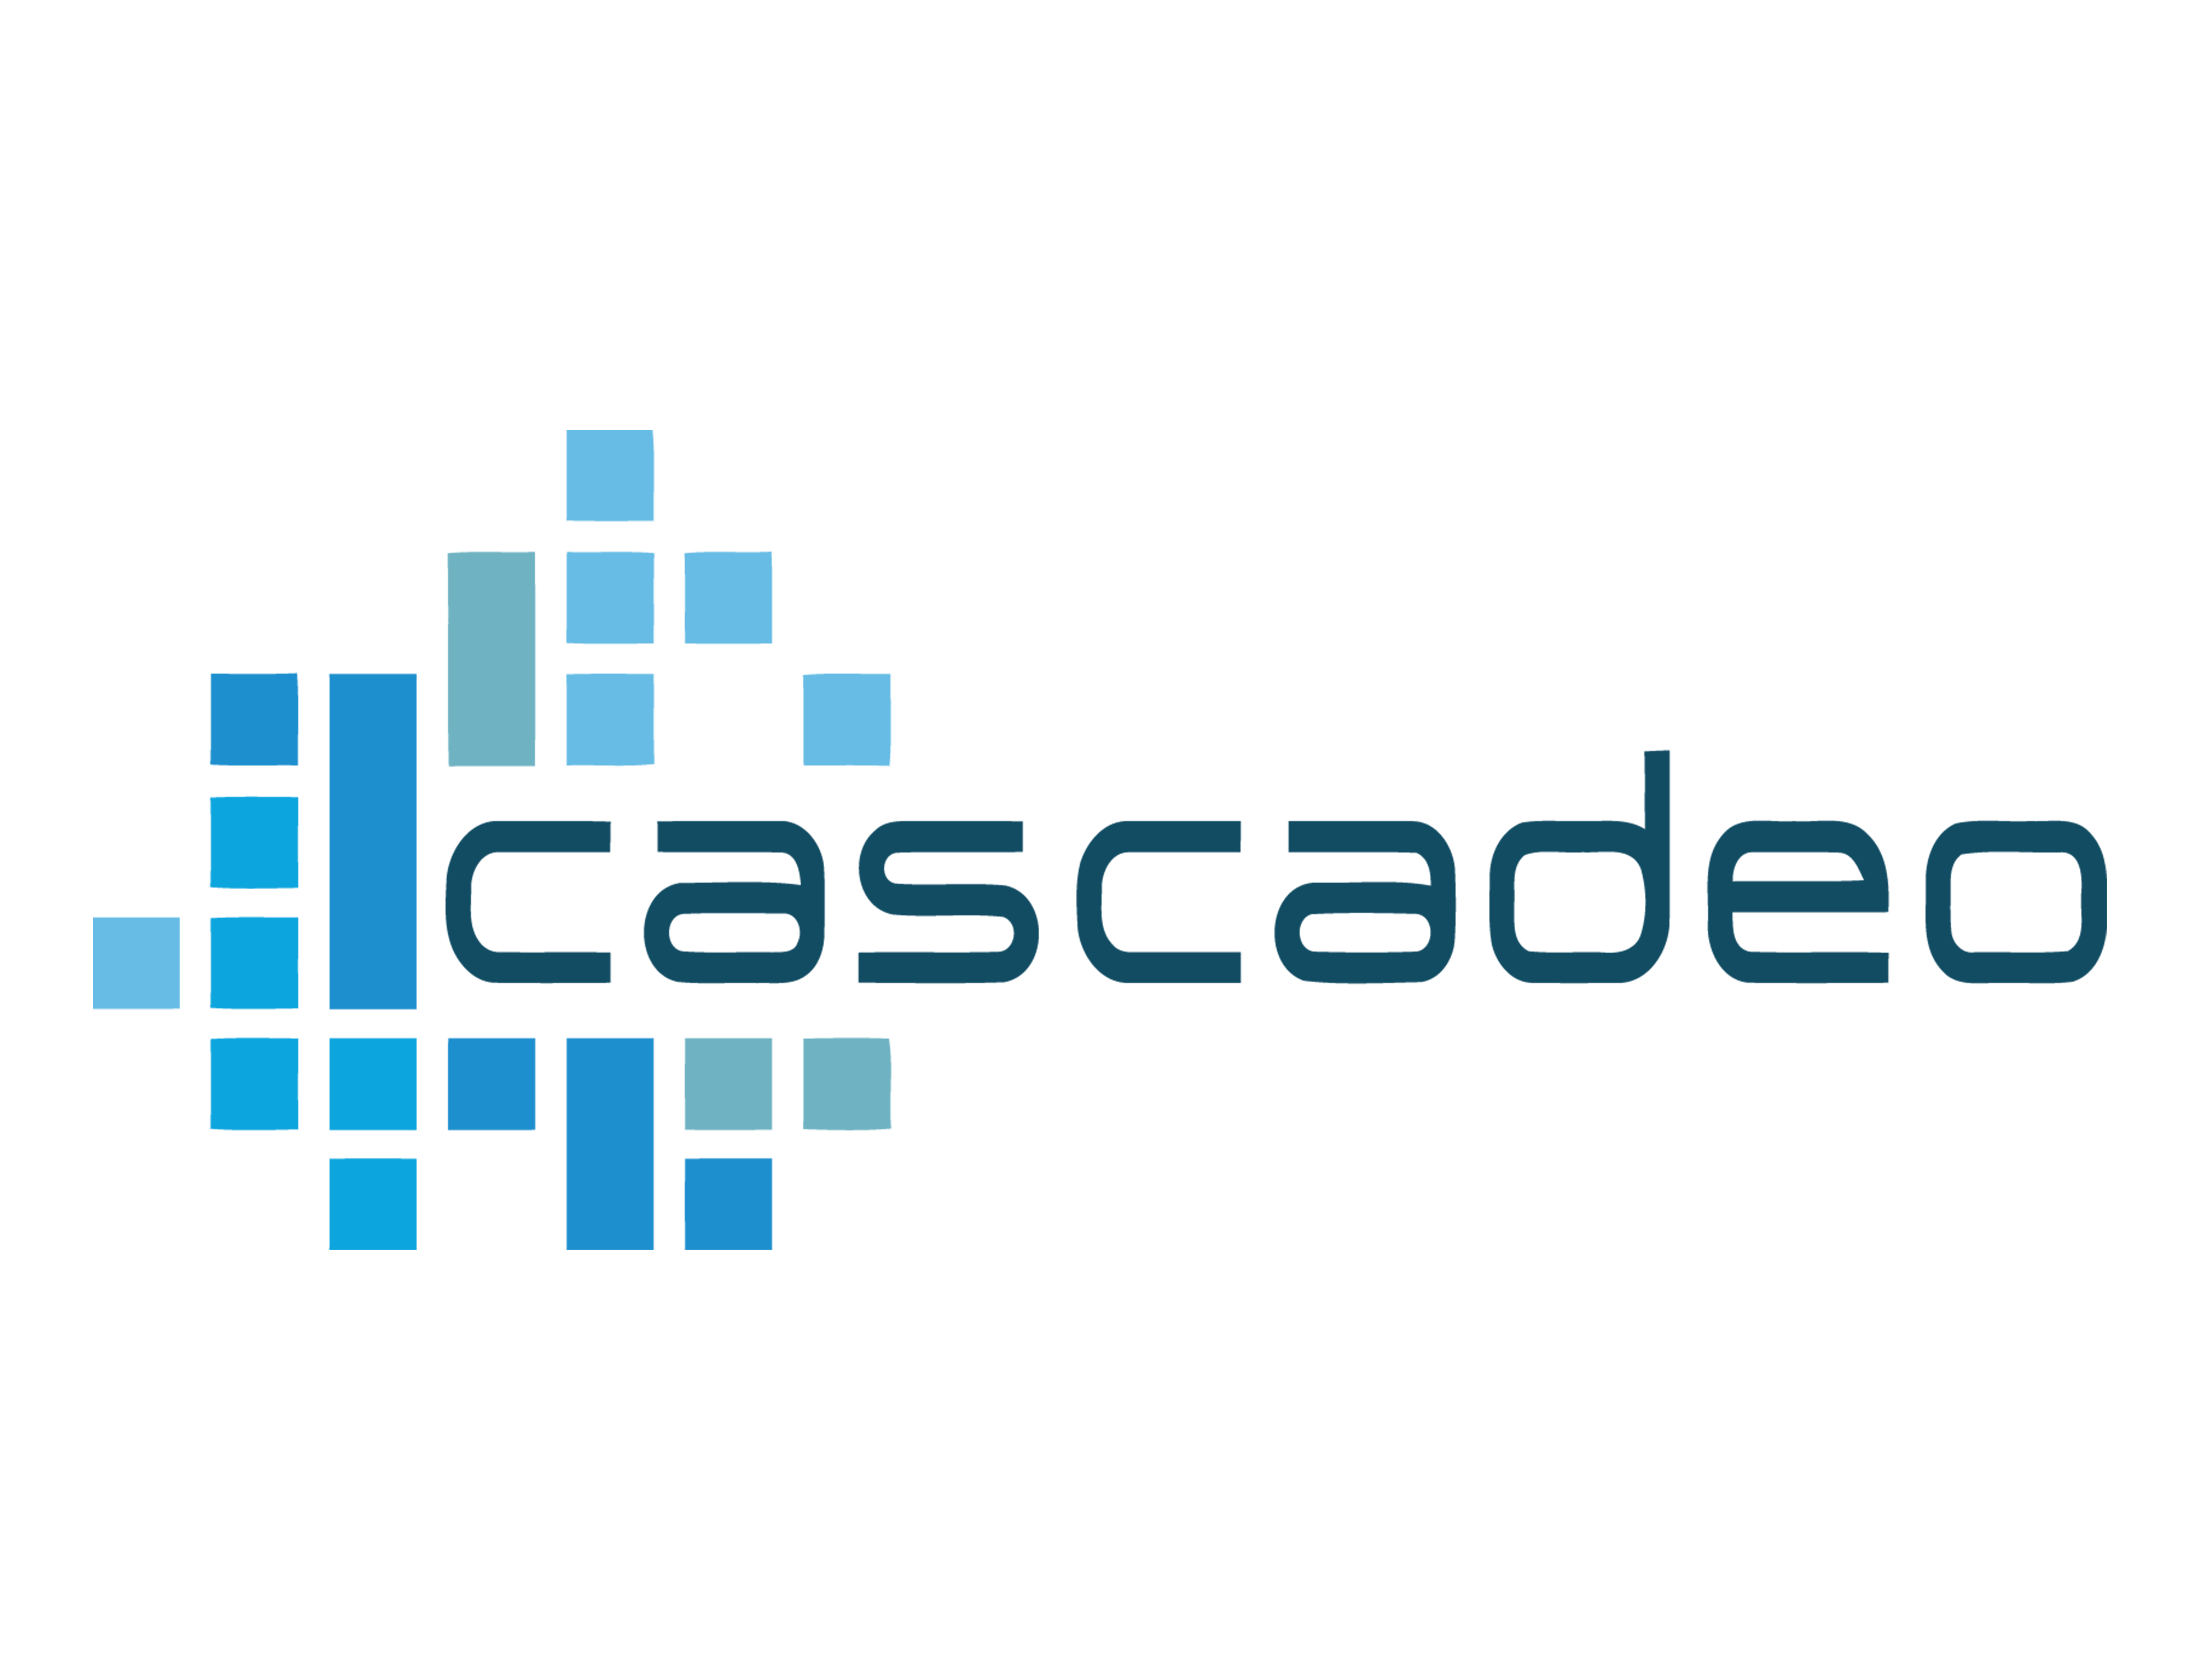 Cascadeo Logo in shades of blue